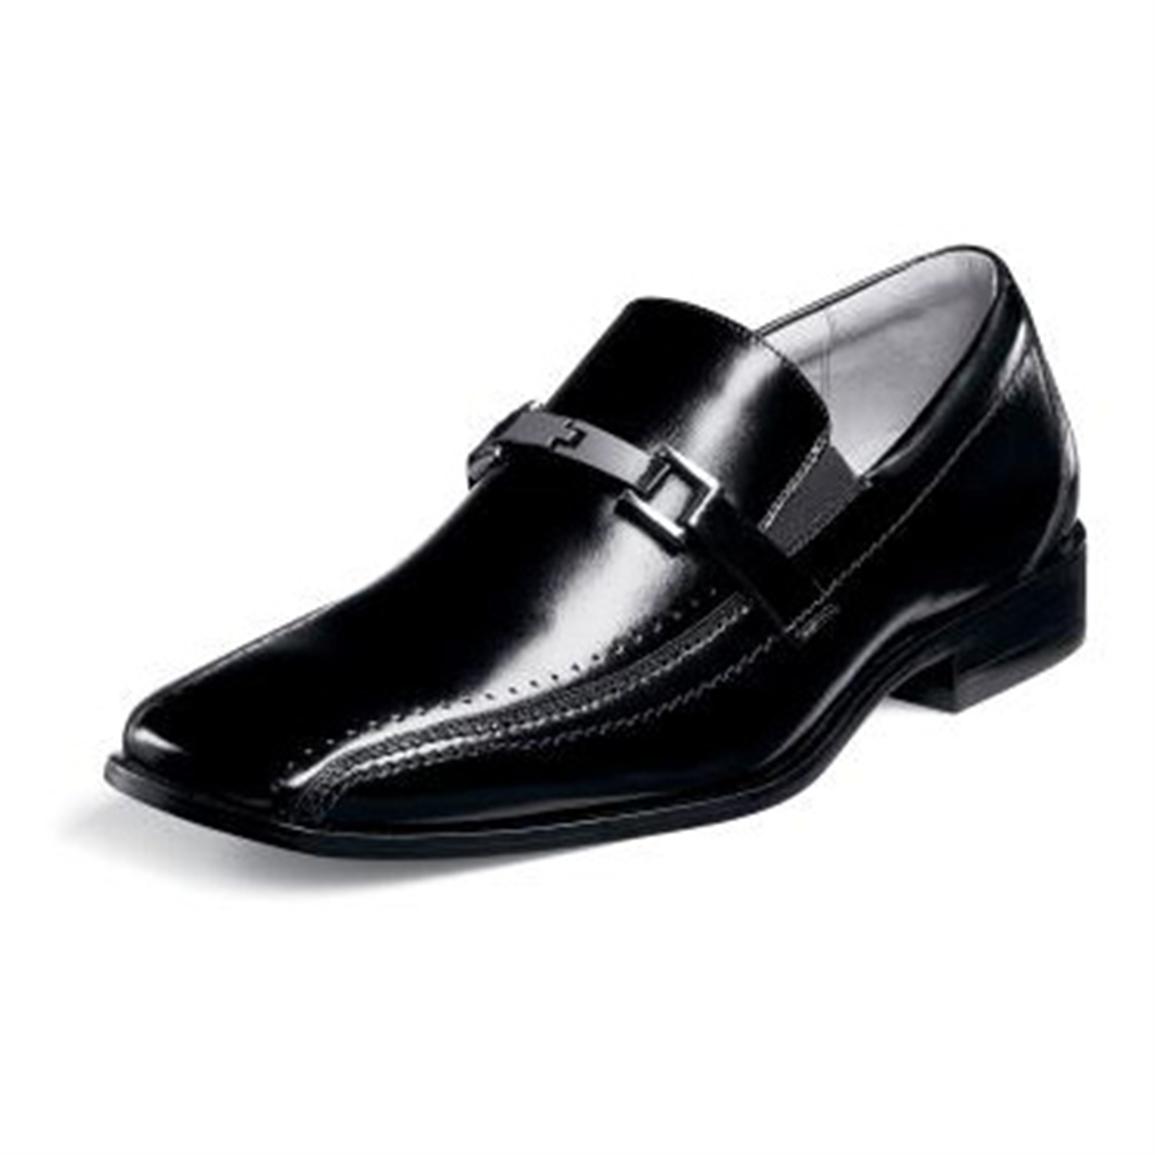 stacy adams mens dress shoes black